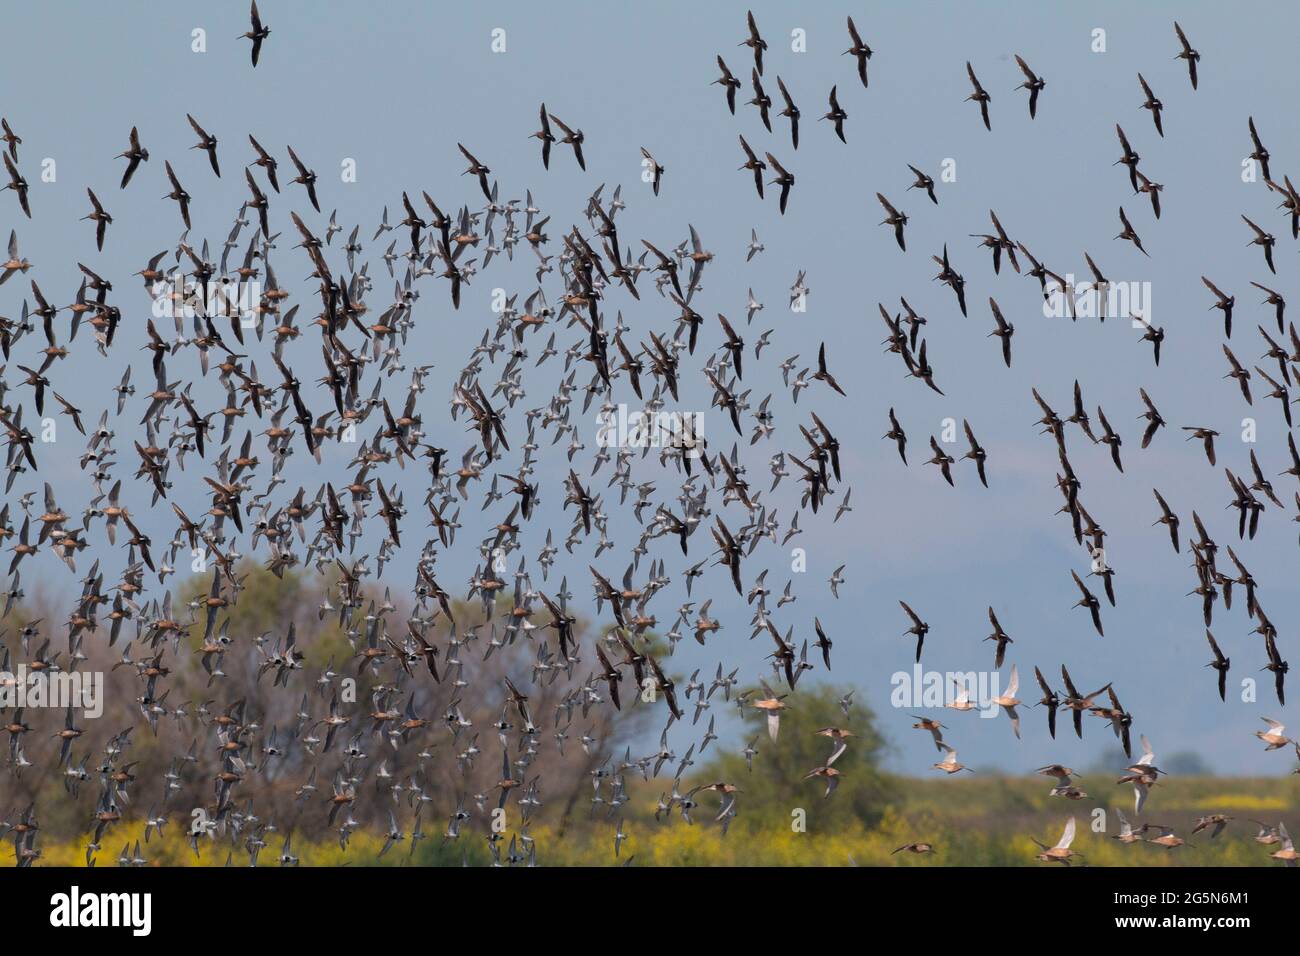 A mixture of Shorebird species in-flight over migrational habitat on the Merced NWR in California's San Joaquin Valley. Stock Photo